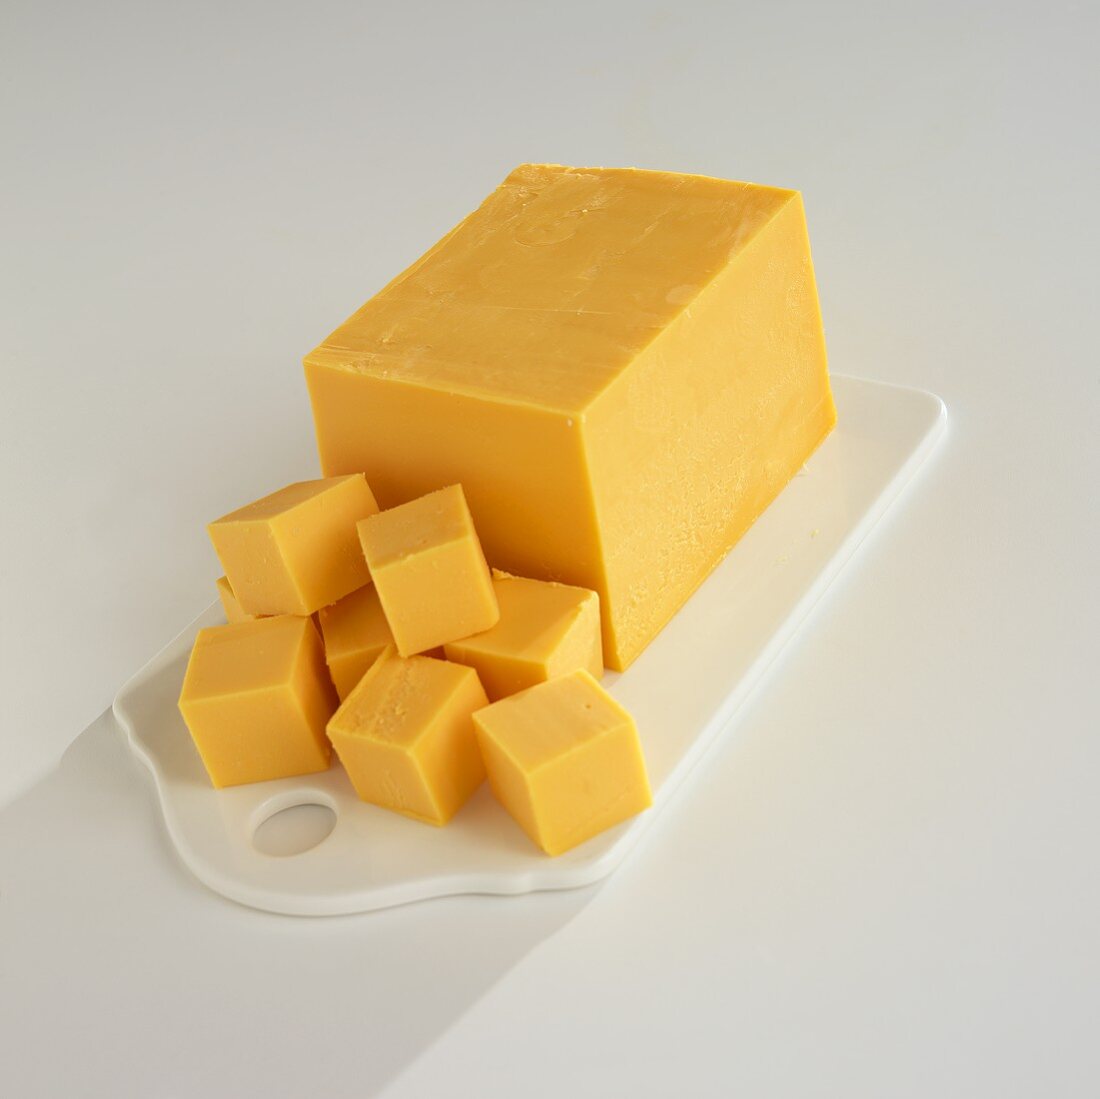 Yellow American Cheese, teilweise in Würfel geschnitten